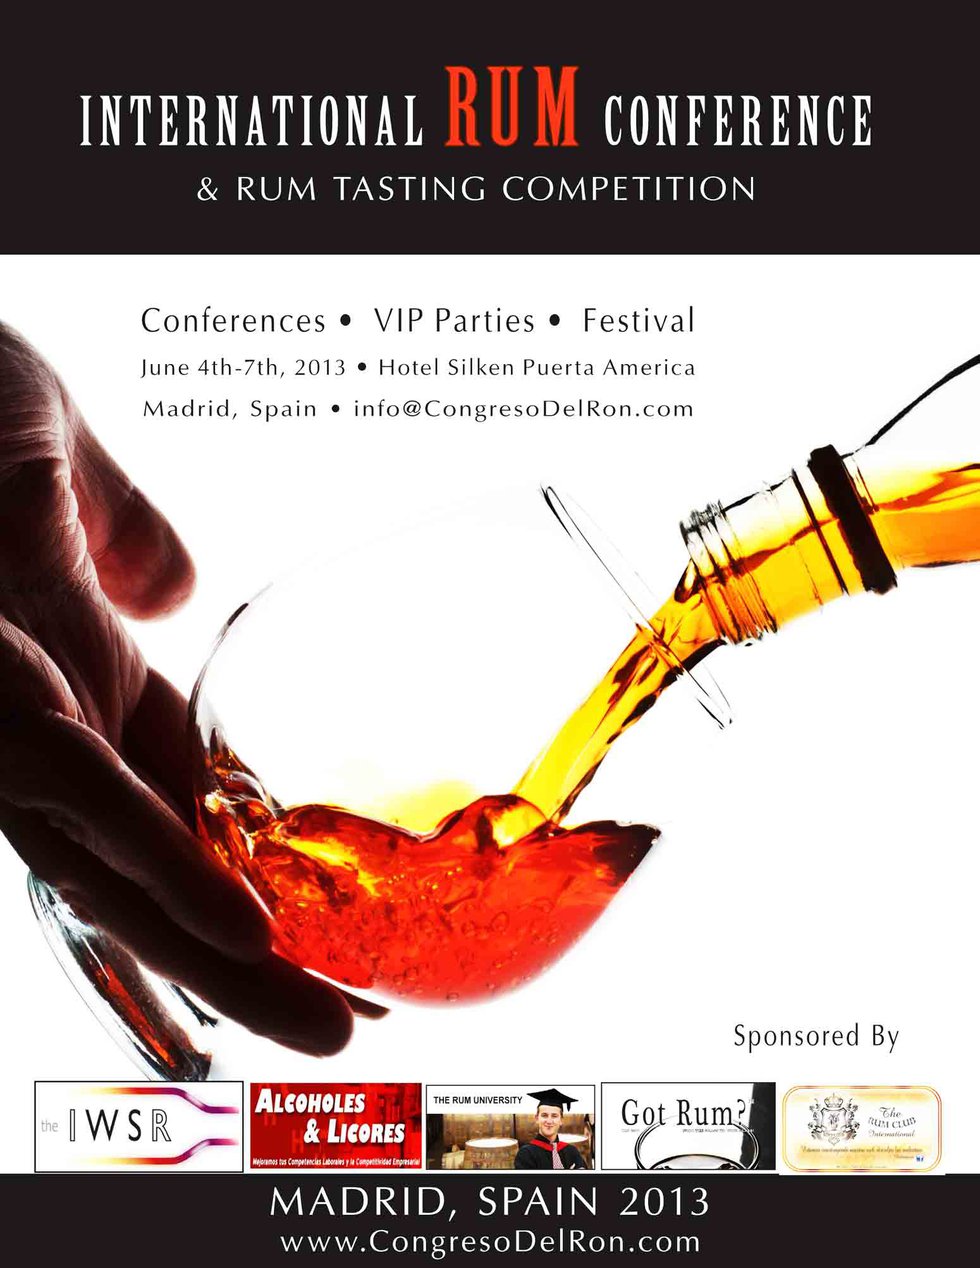 International Rum Conference 2013 - Madrid, Spain